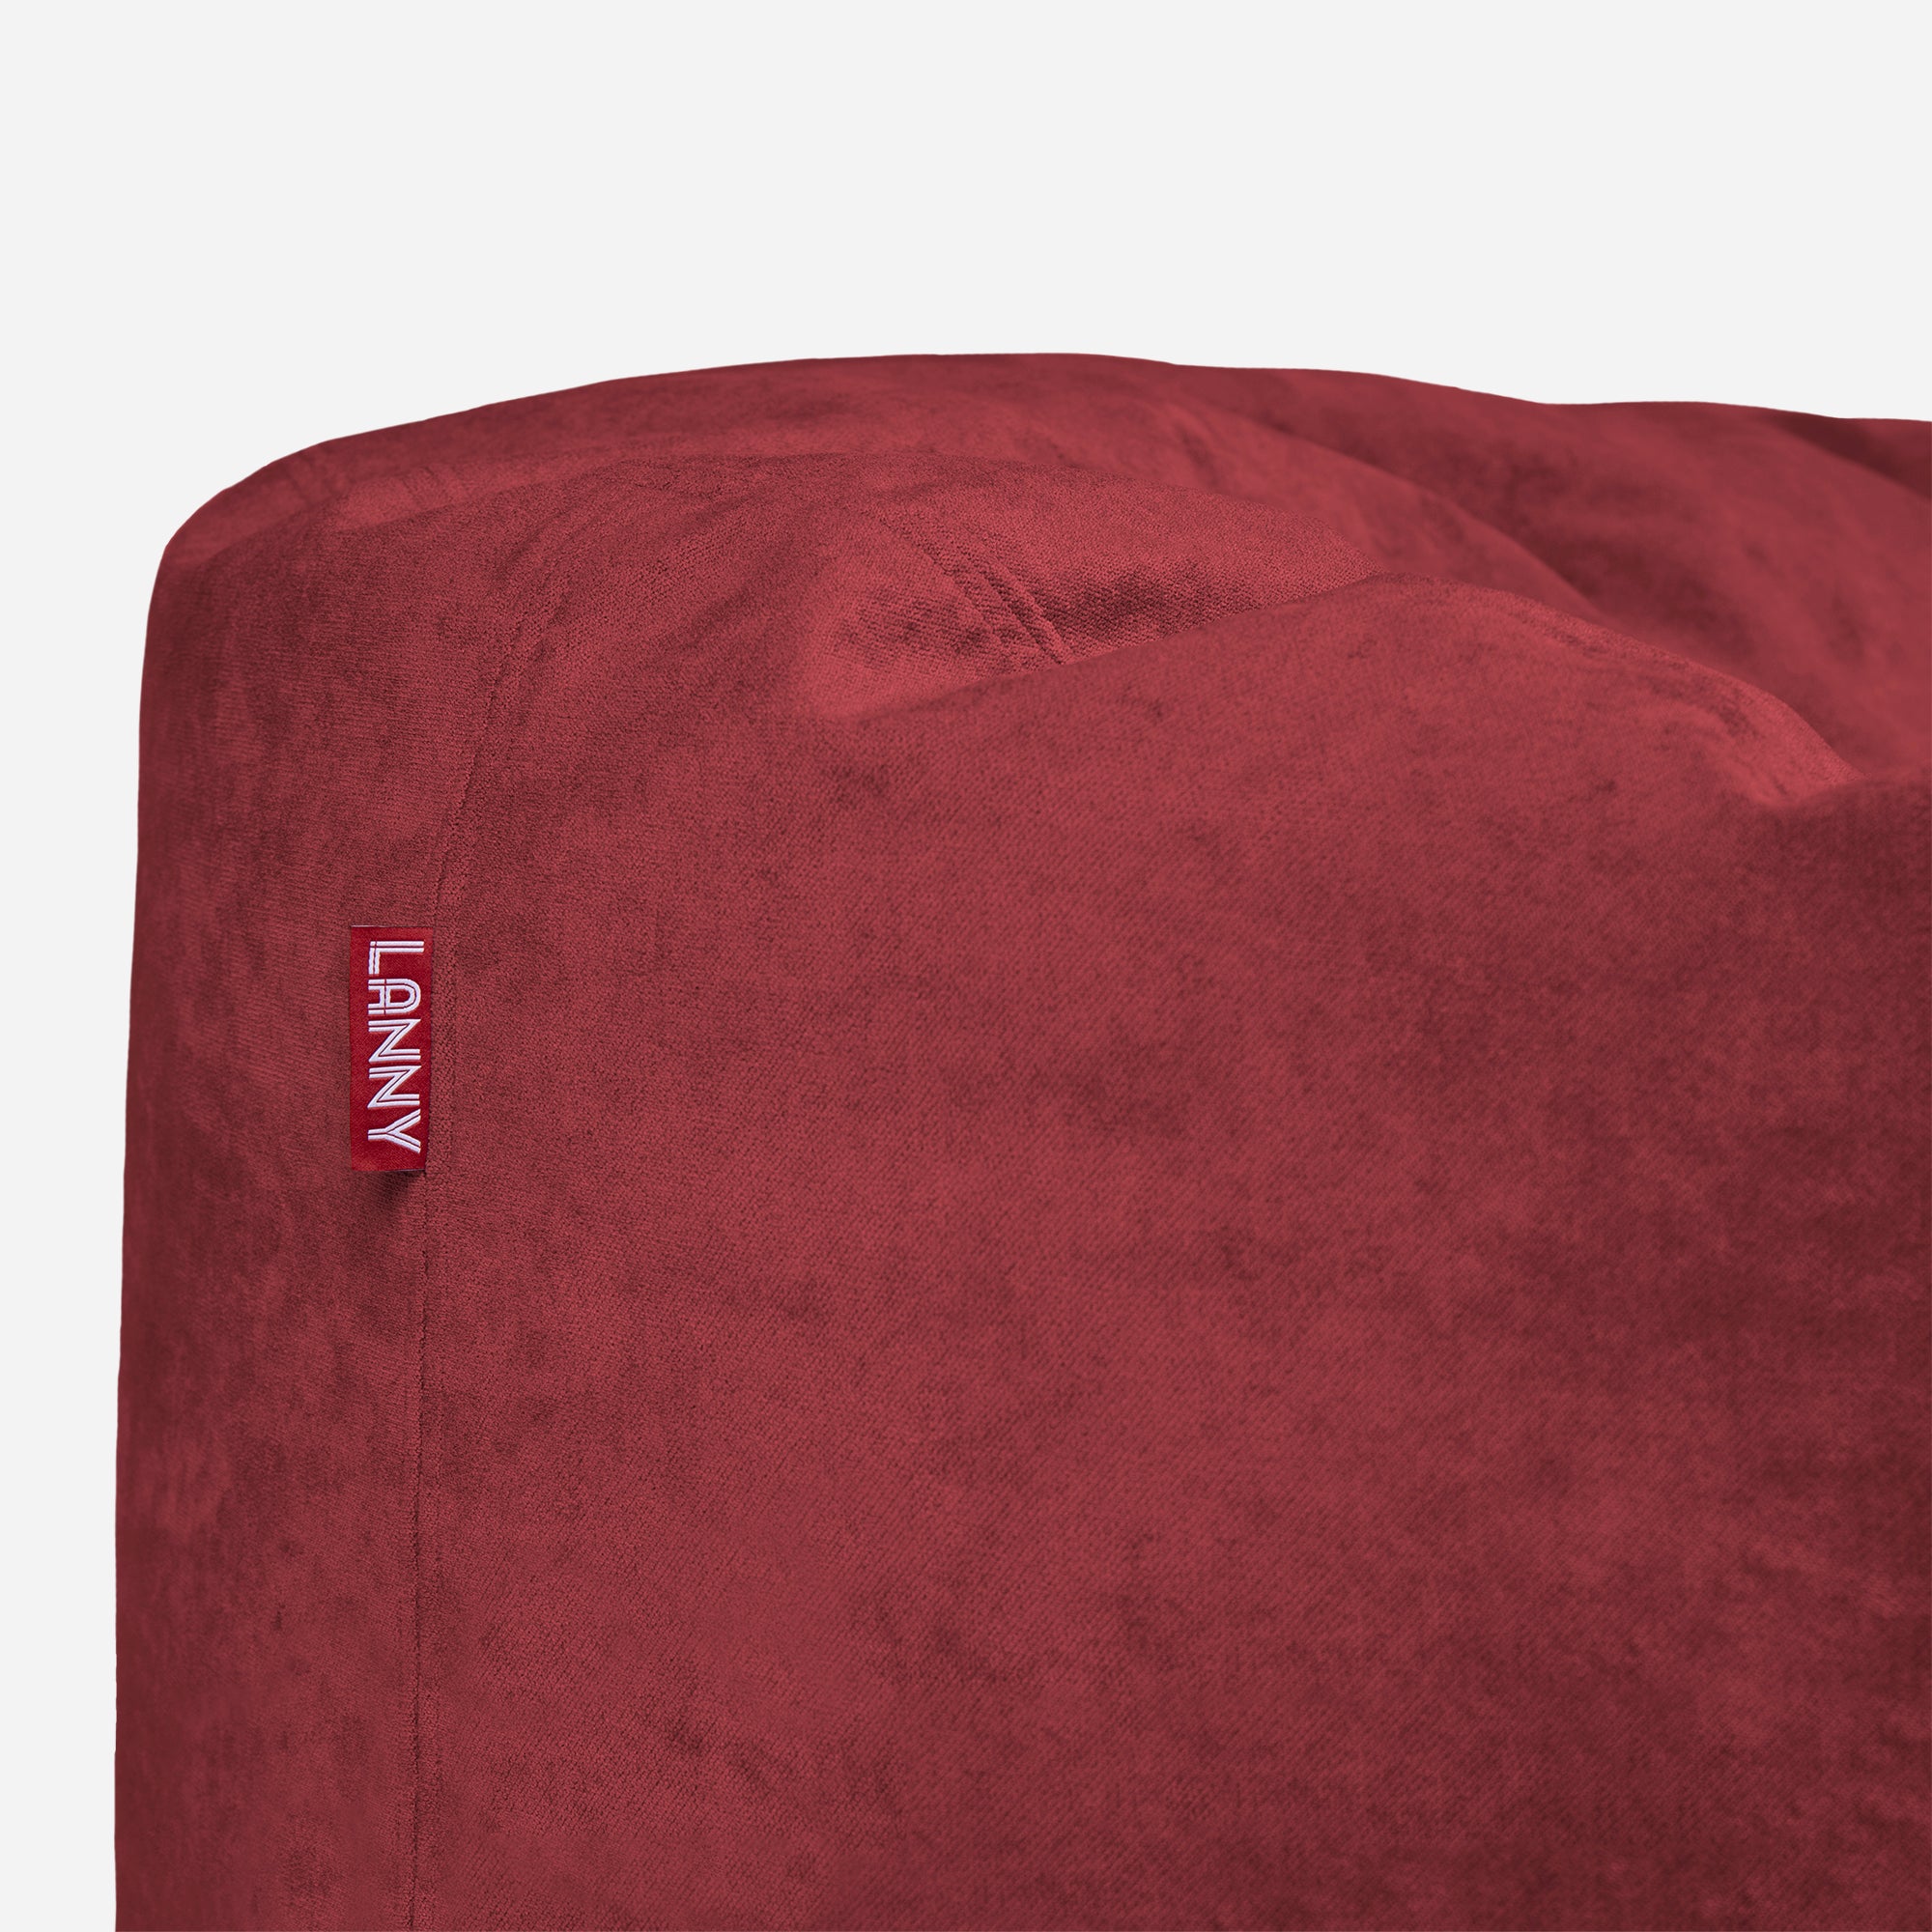 Large Original Aldo Red Bean Bag